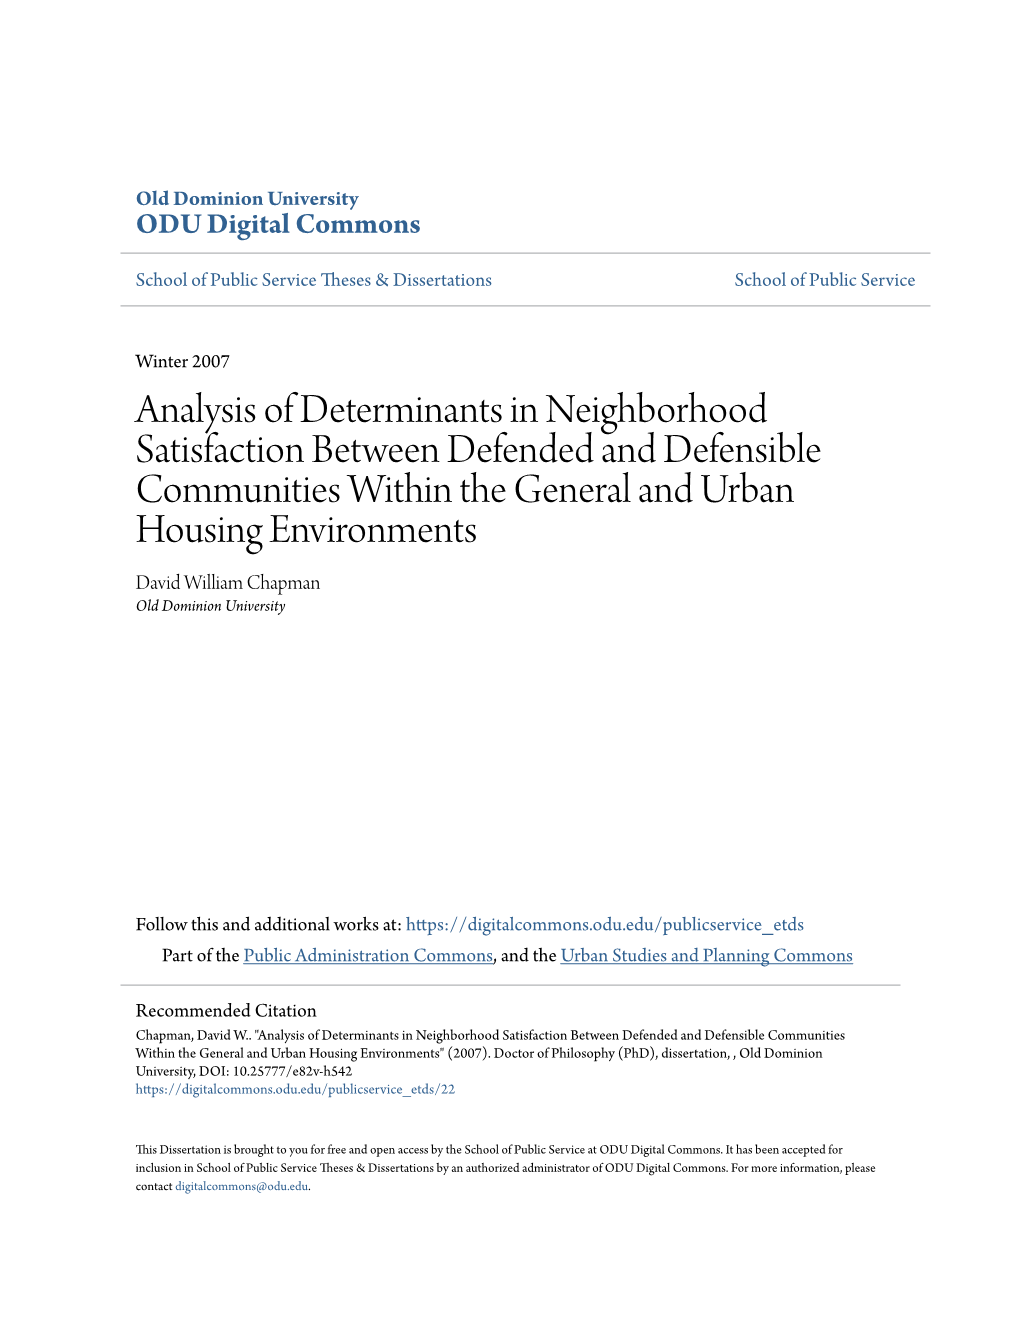 Analysis of Determinants in Neighborhood Satisfaction